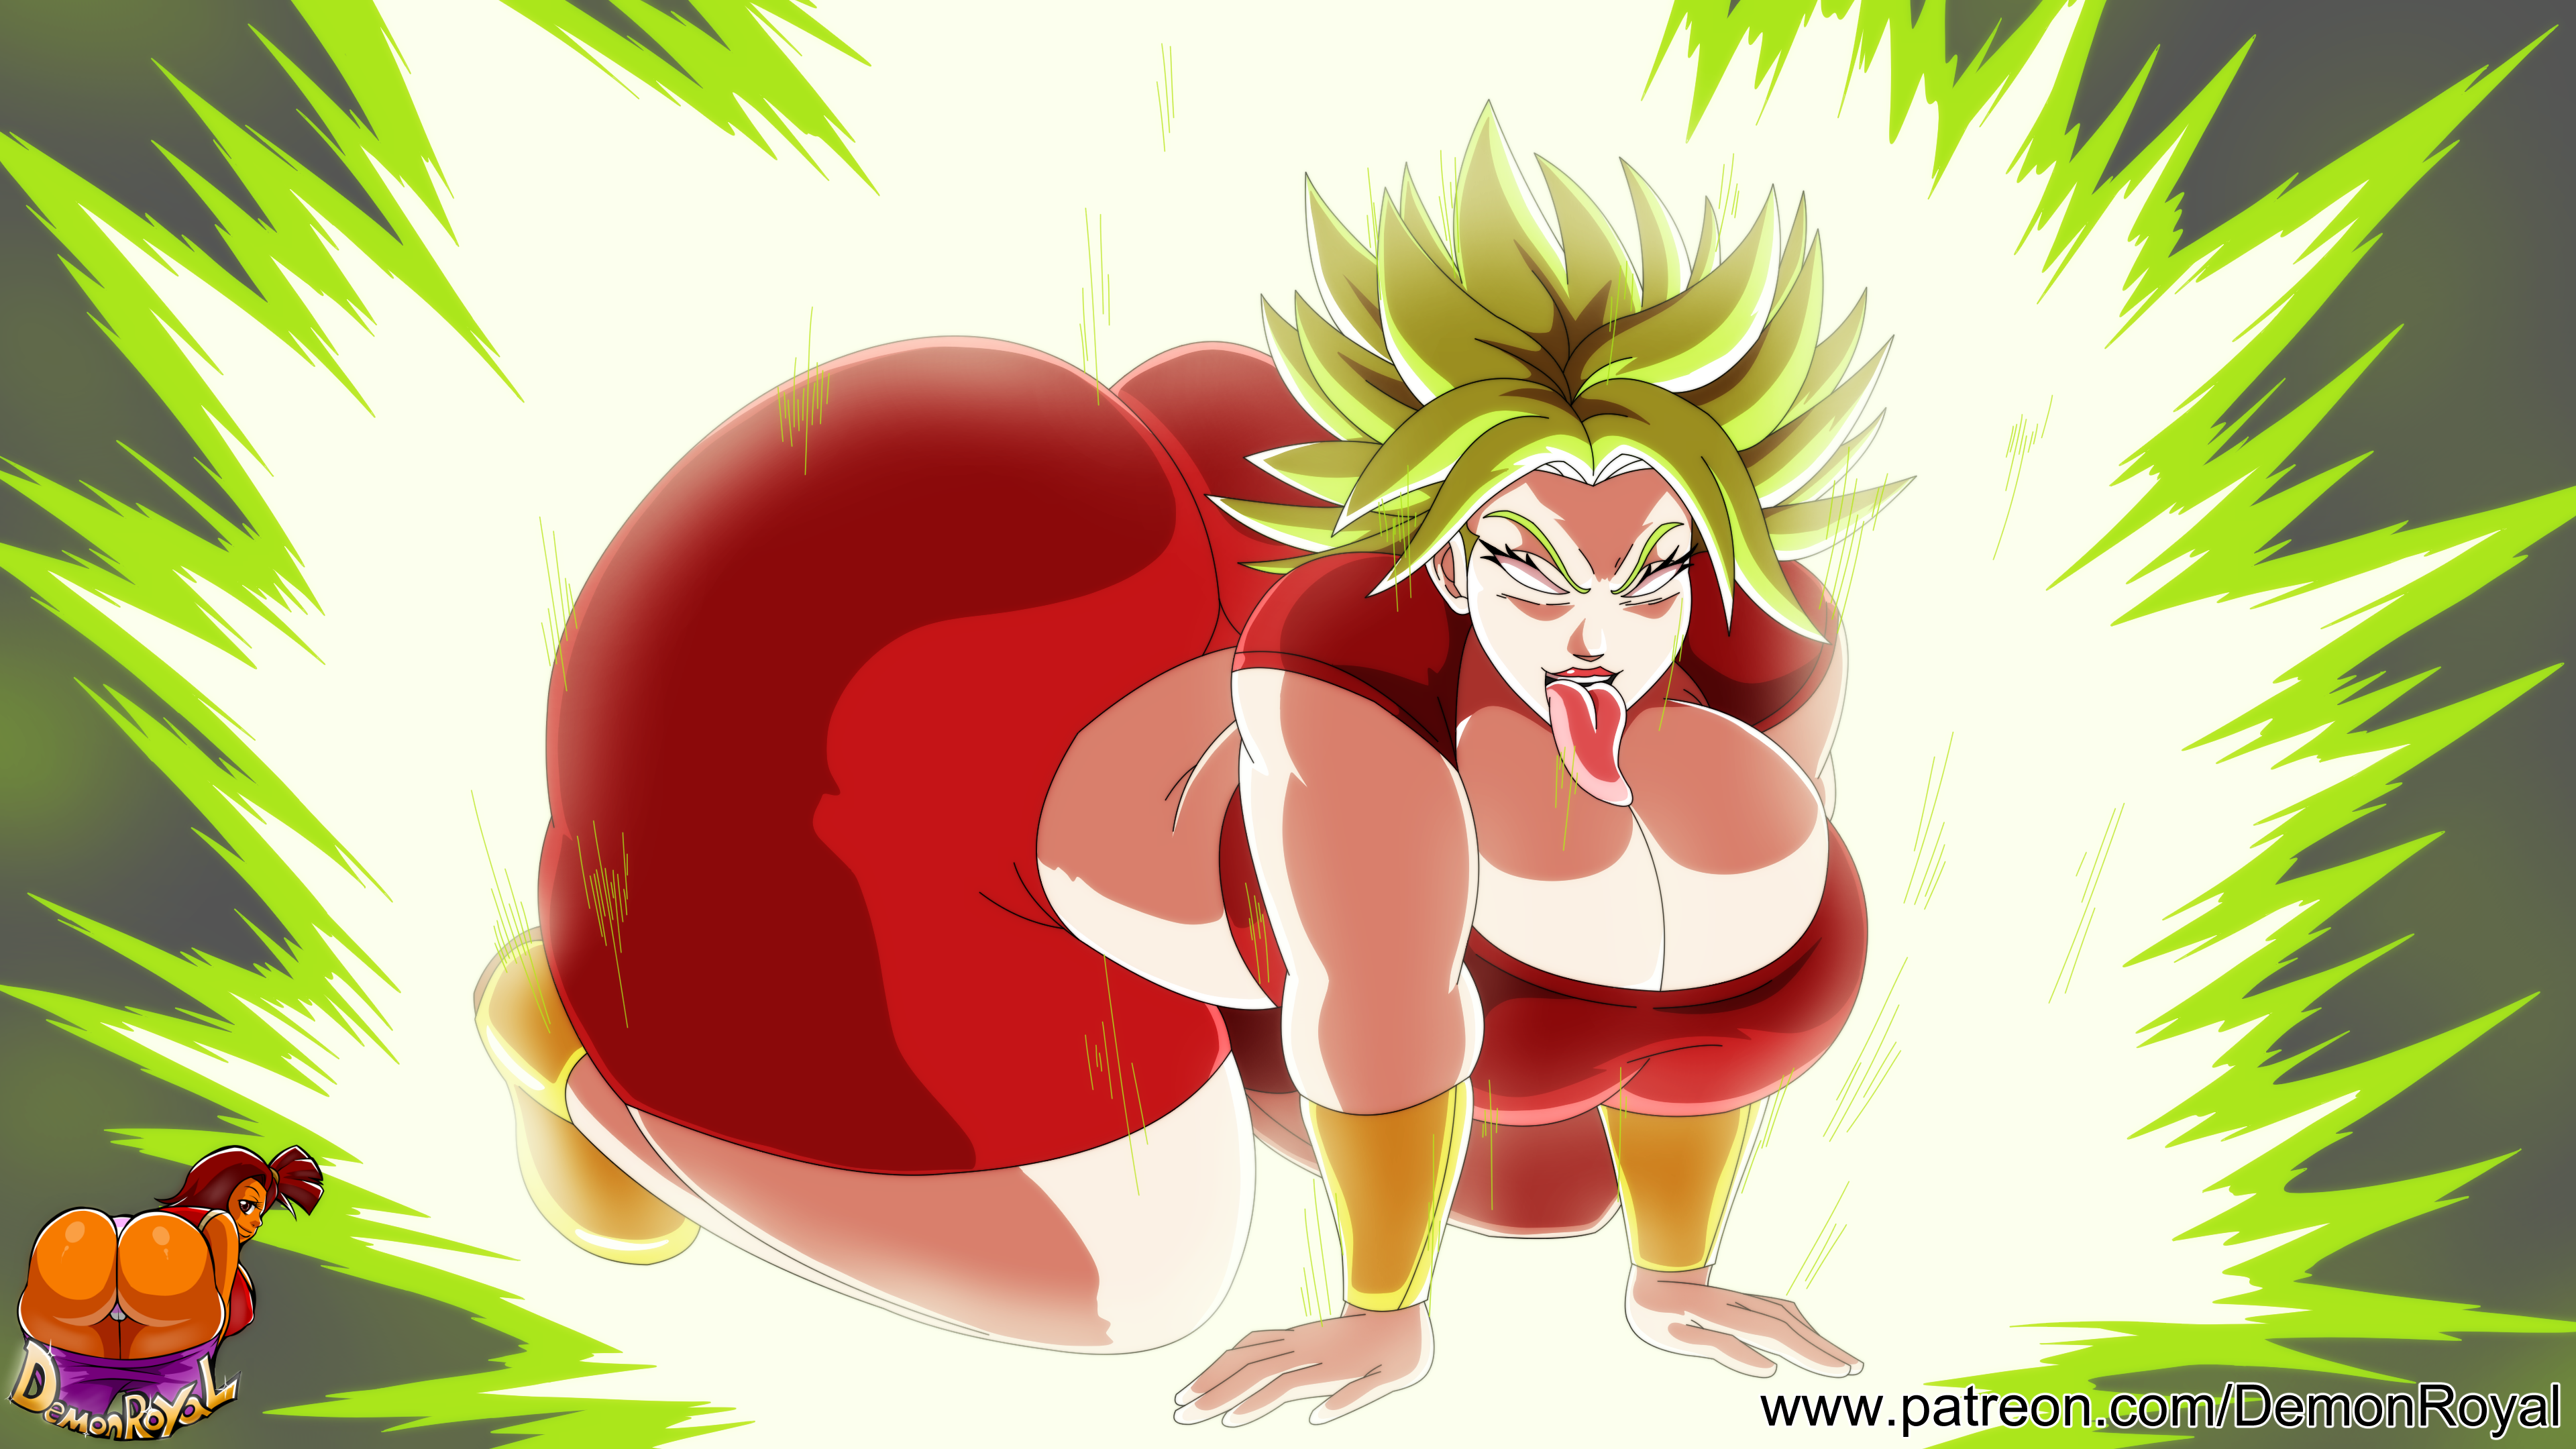 Supersaiyan boobs - ðŸ§¡ Caulifla's funny Ultra Super Saiyan transformat...